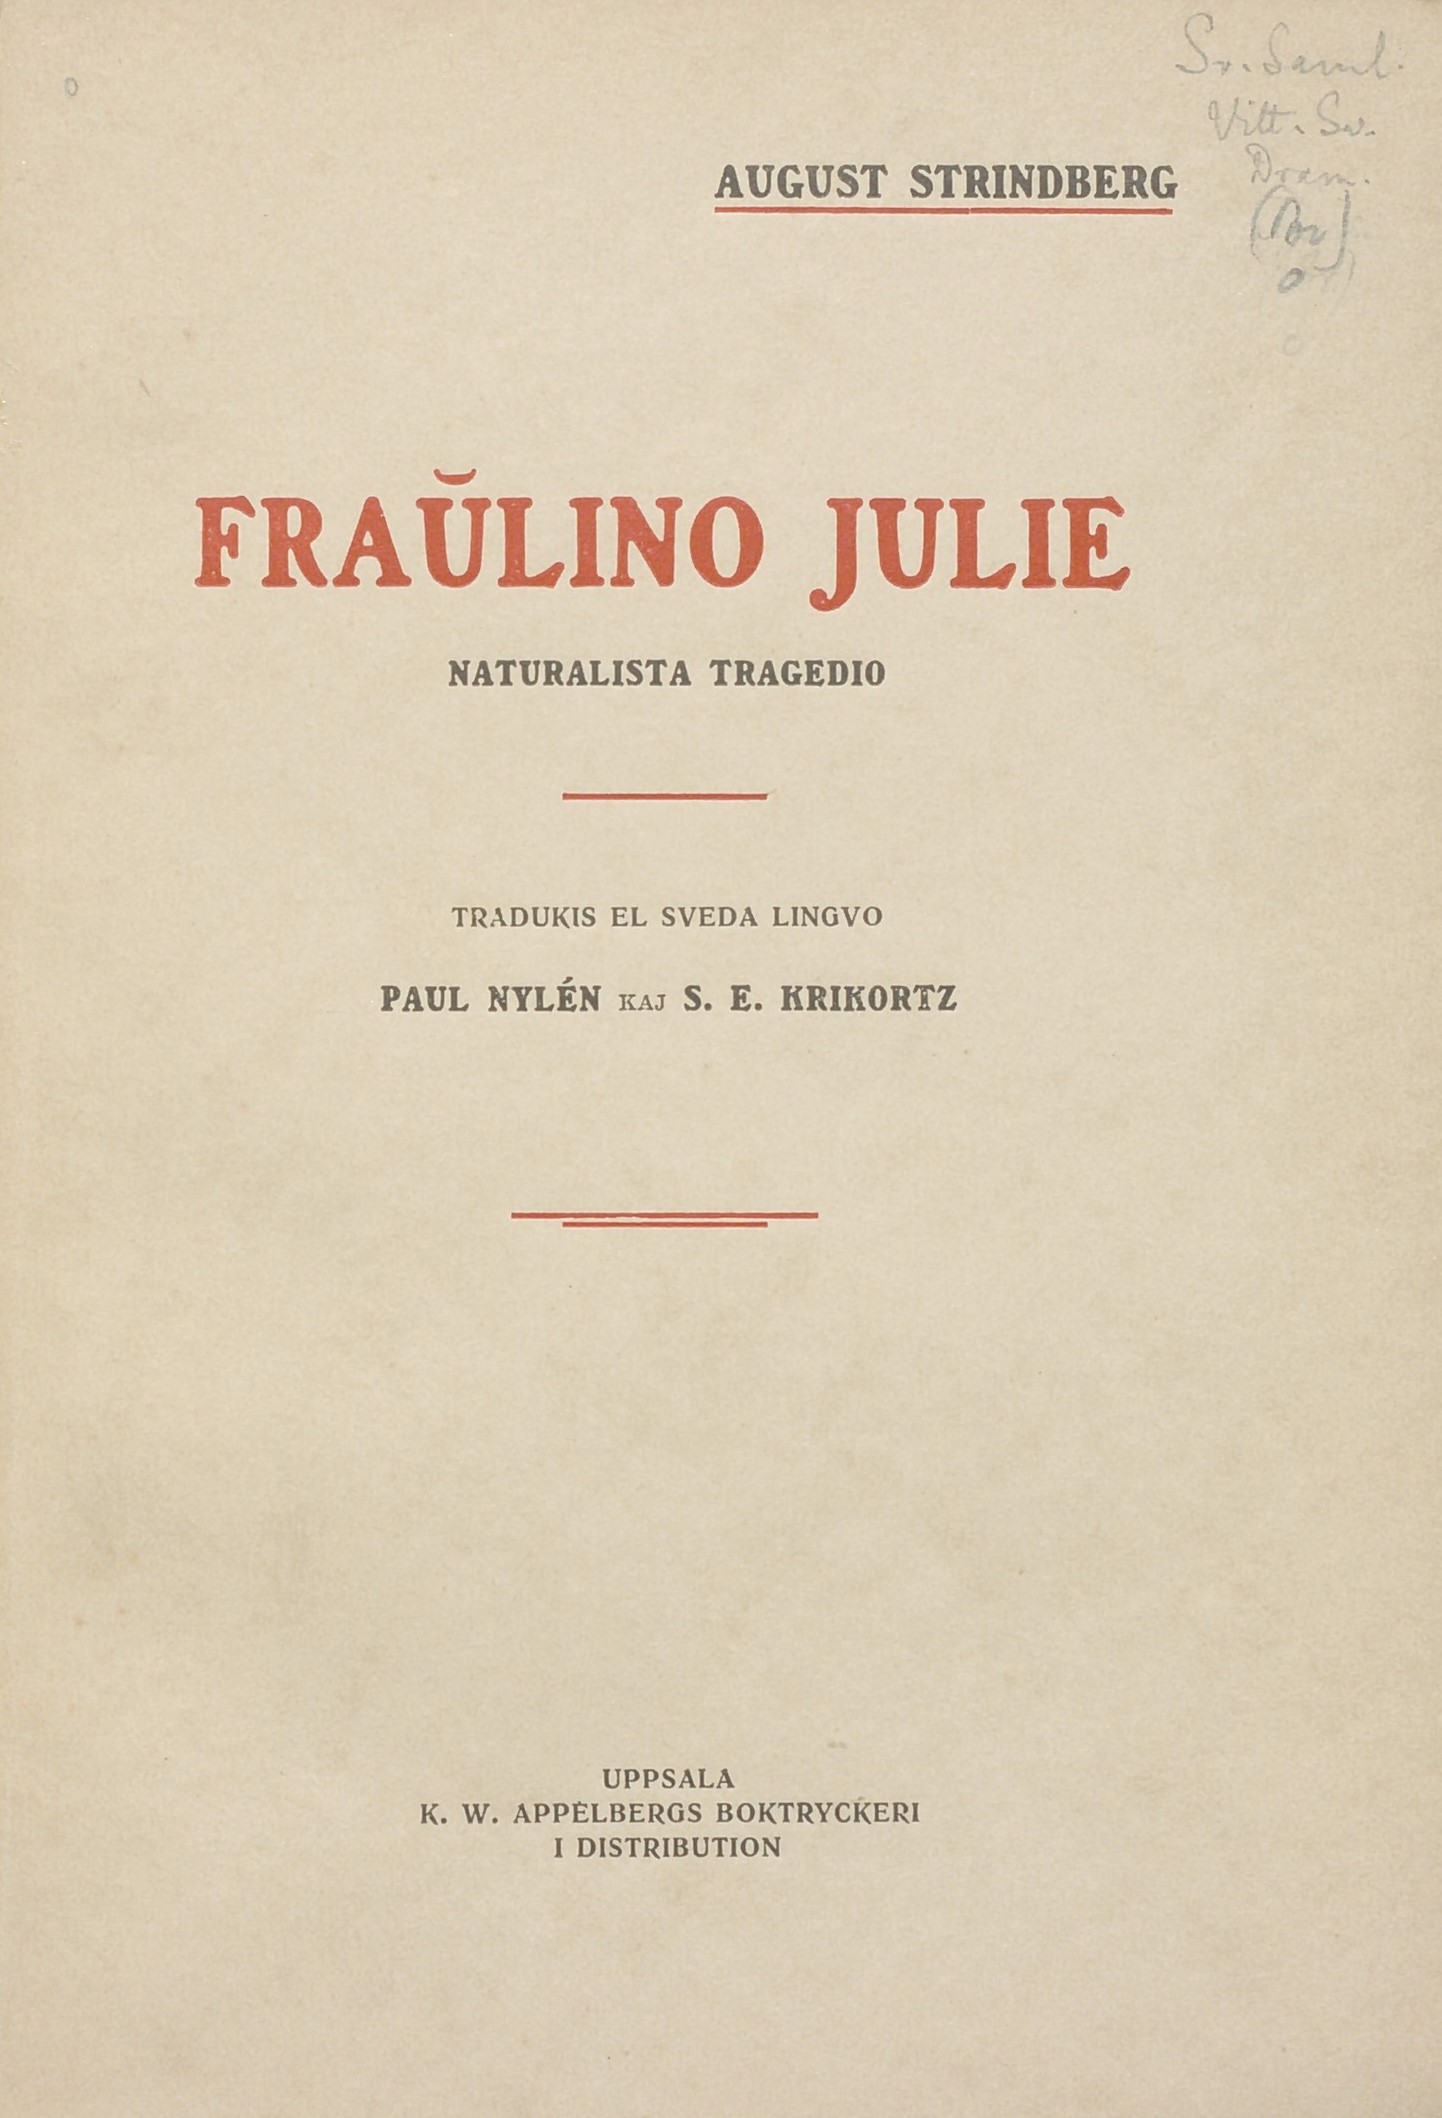 Broschyromslag. Text: August Strindberg Fraulino Julie. 